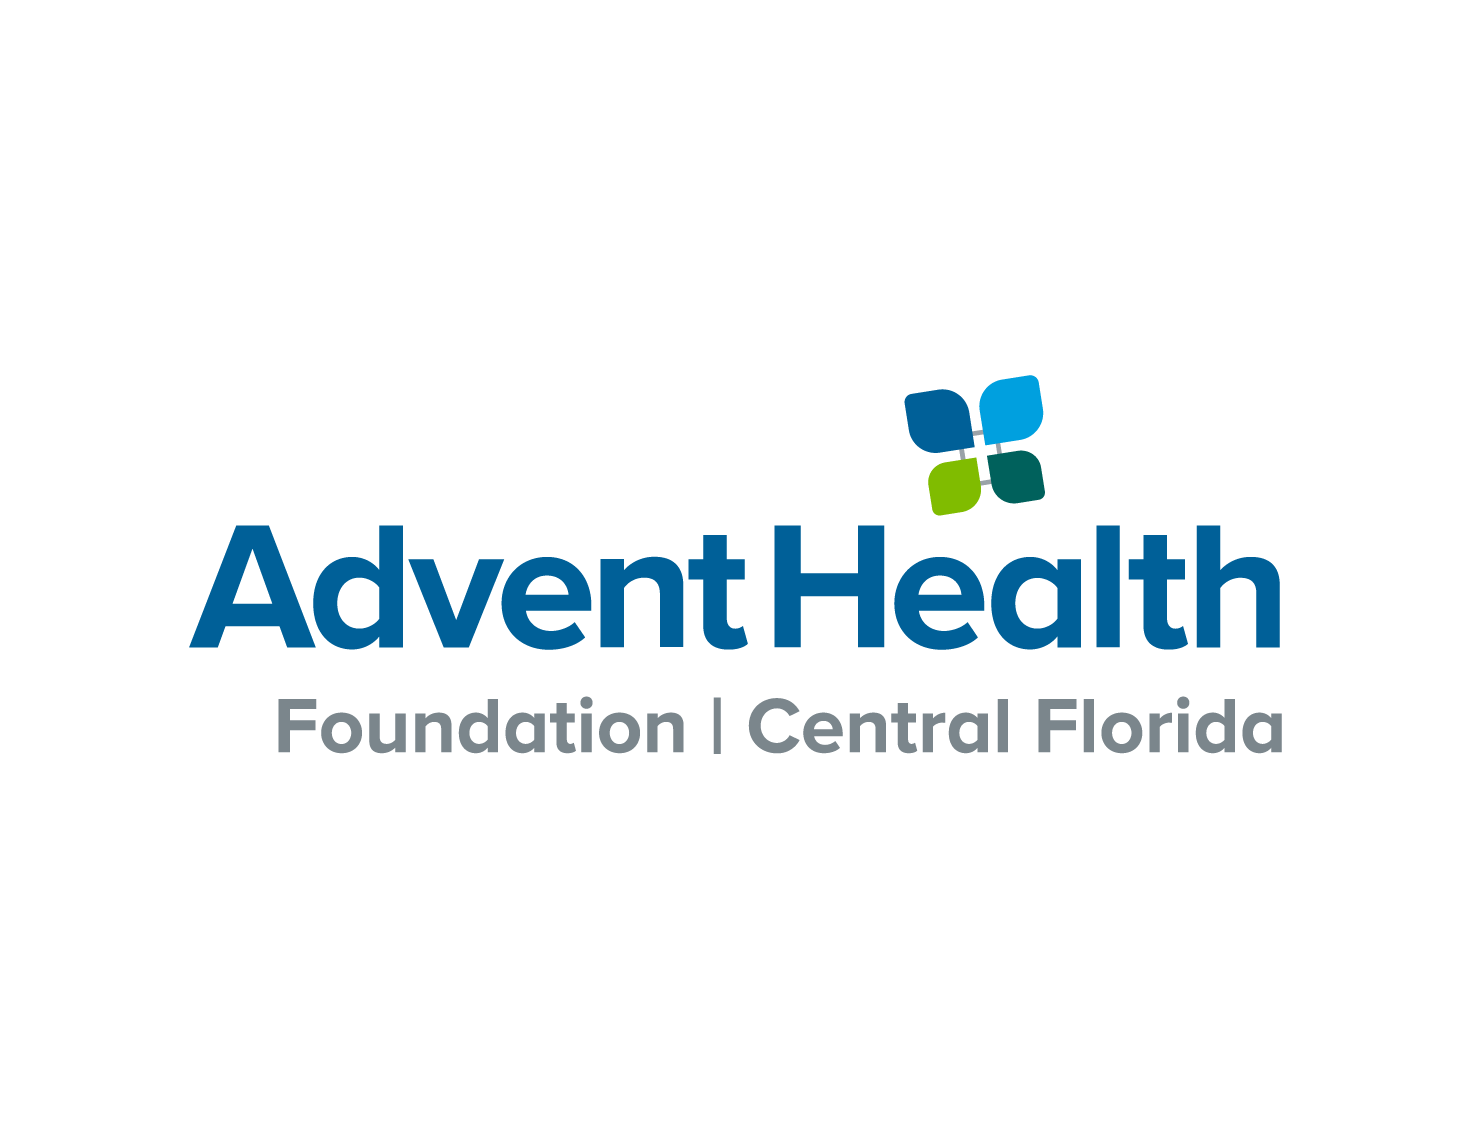 Advent Health Foundation